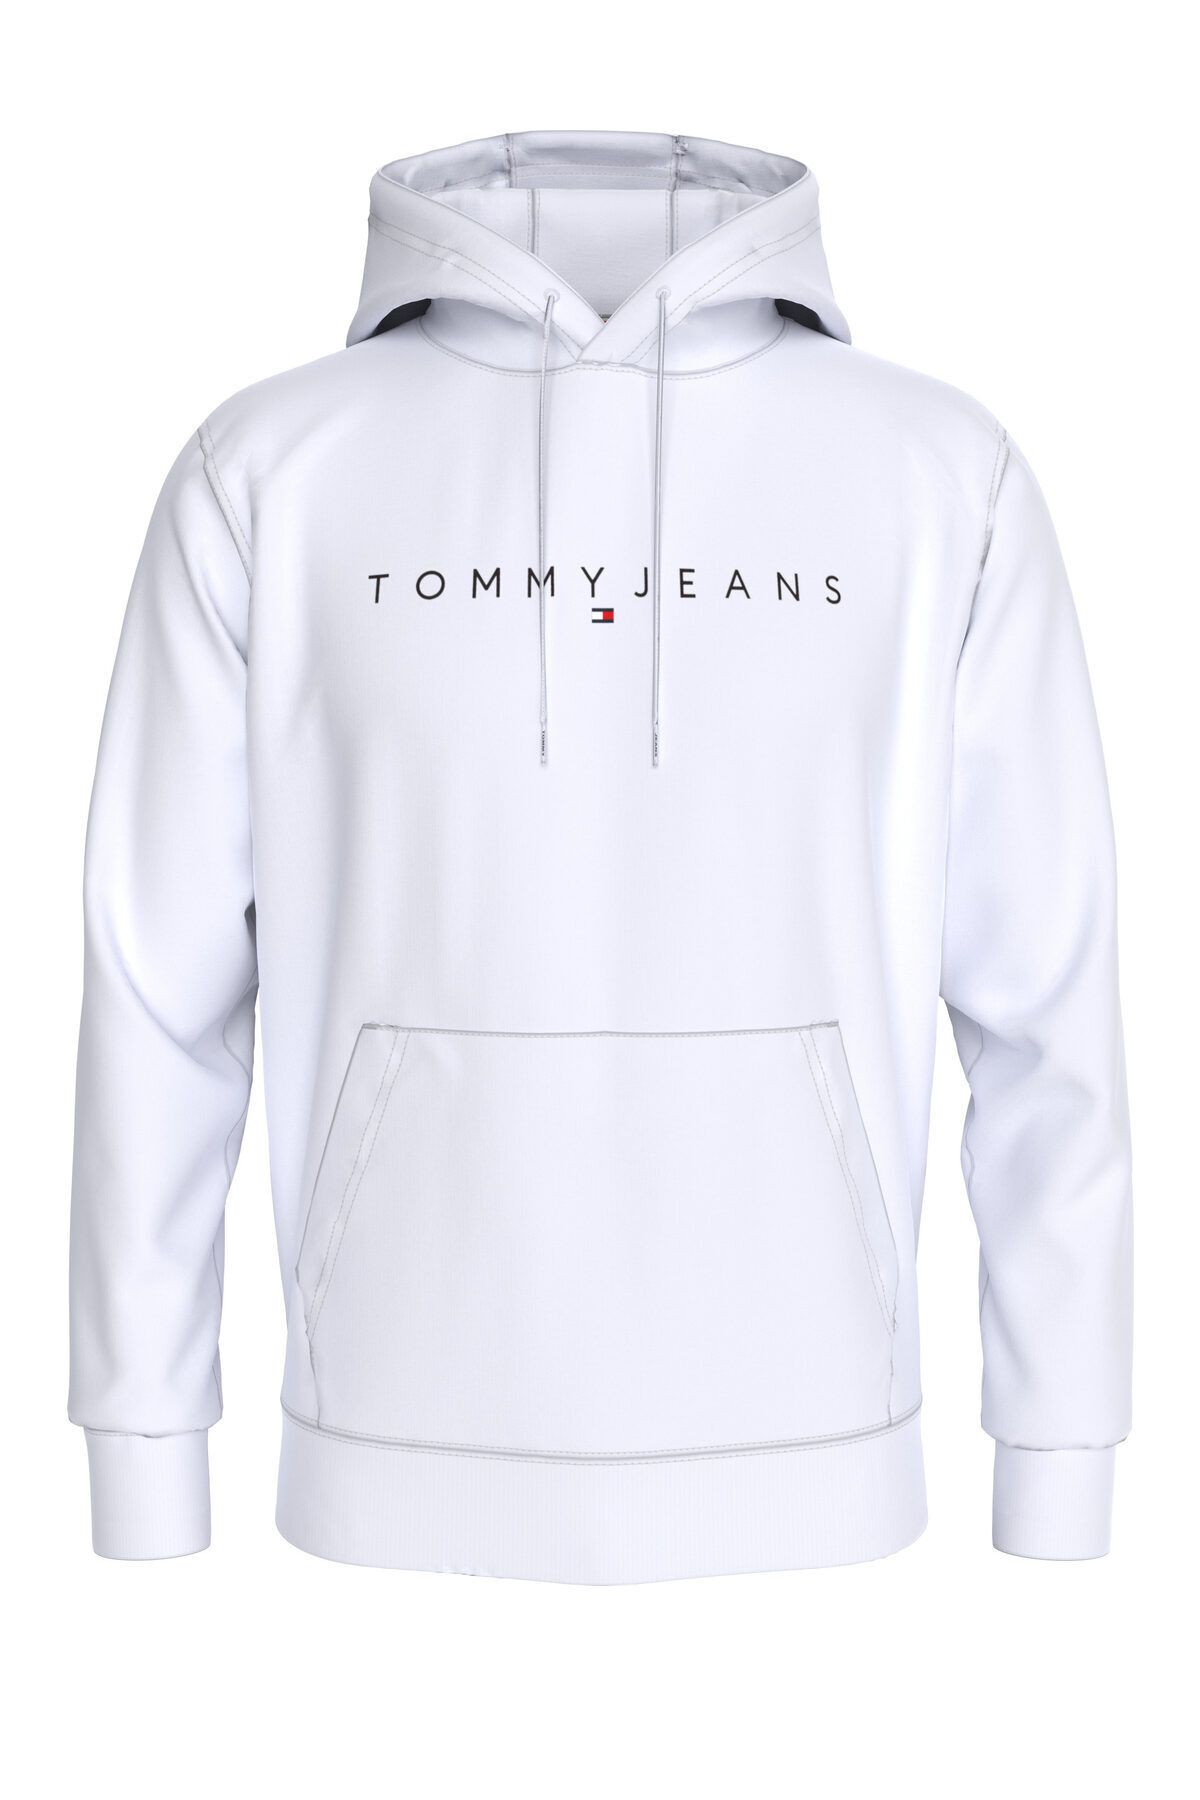 Tommy Hilfiger Erkek Marka Logolu Kapüşonlu Şık Görünüşlü Beyaz Sweatshirt Dm0dm17985-Ybr